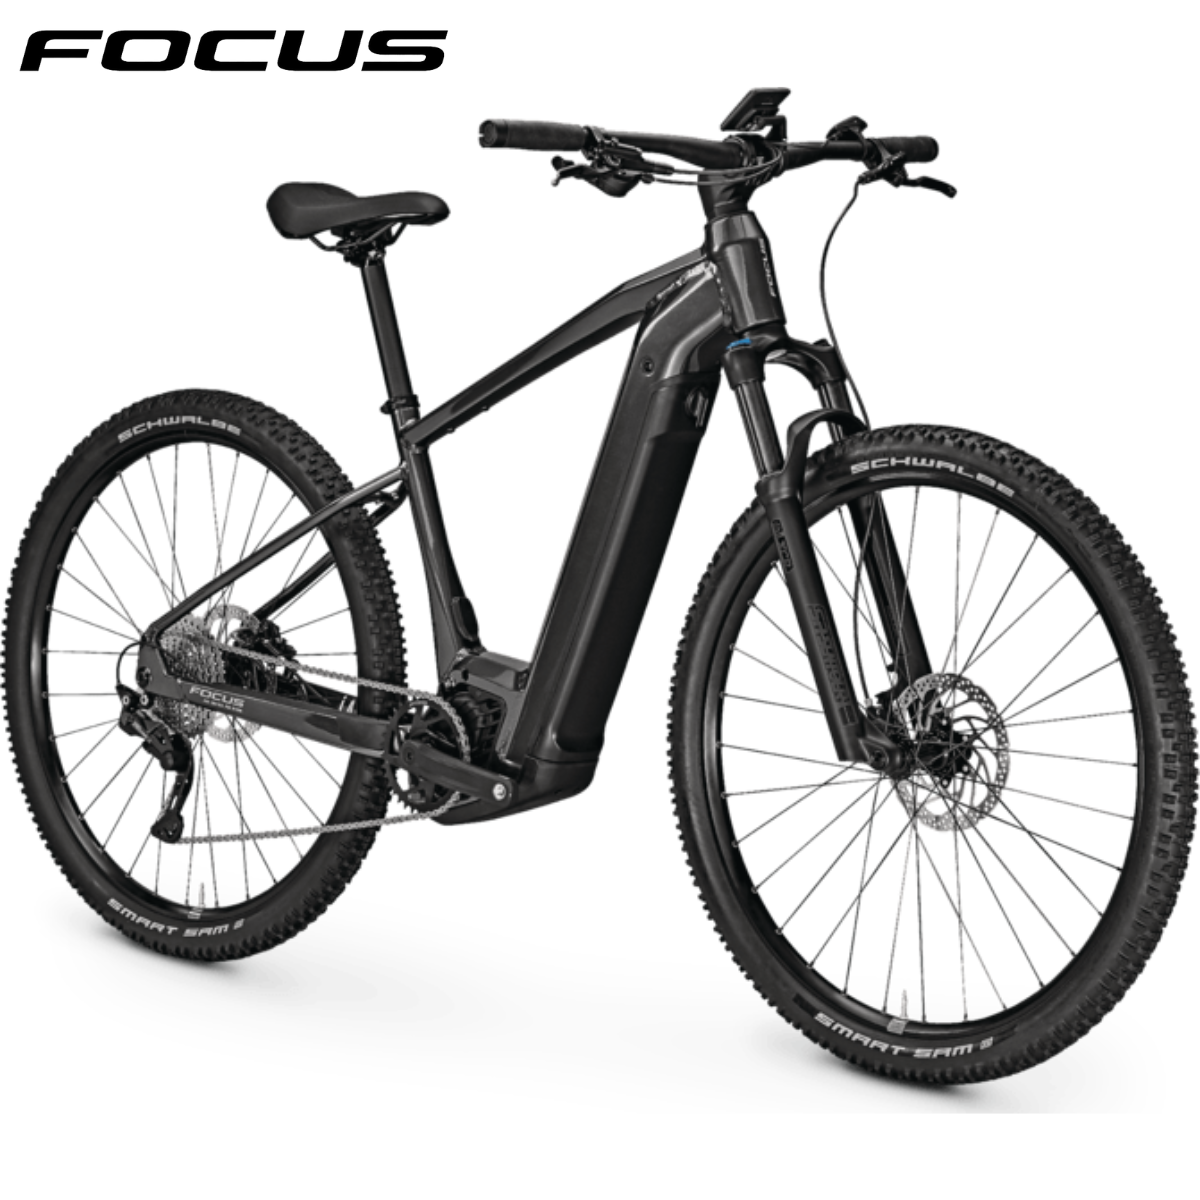 FOCUS JARIFA² 6.7 Electric Mountain Bike